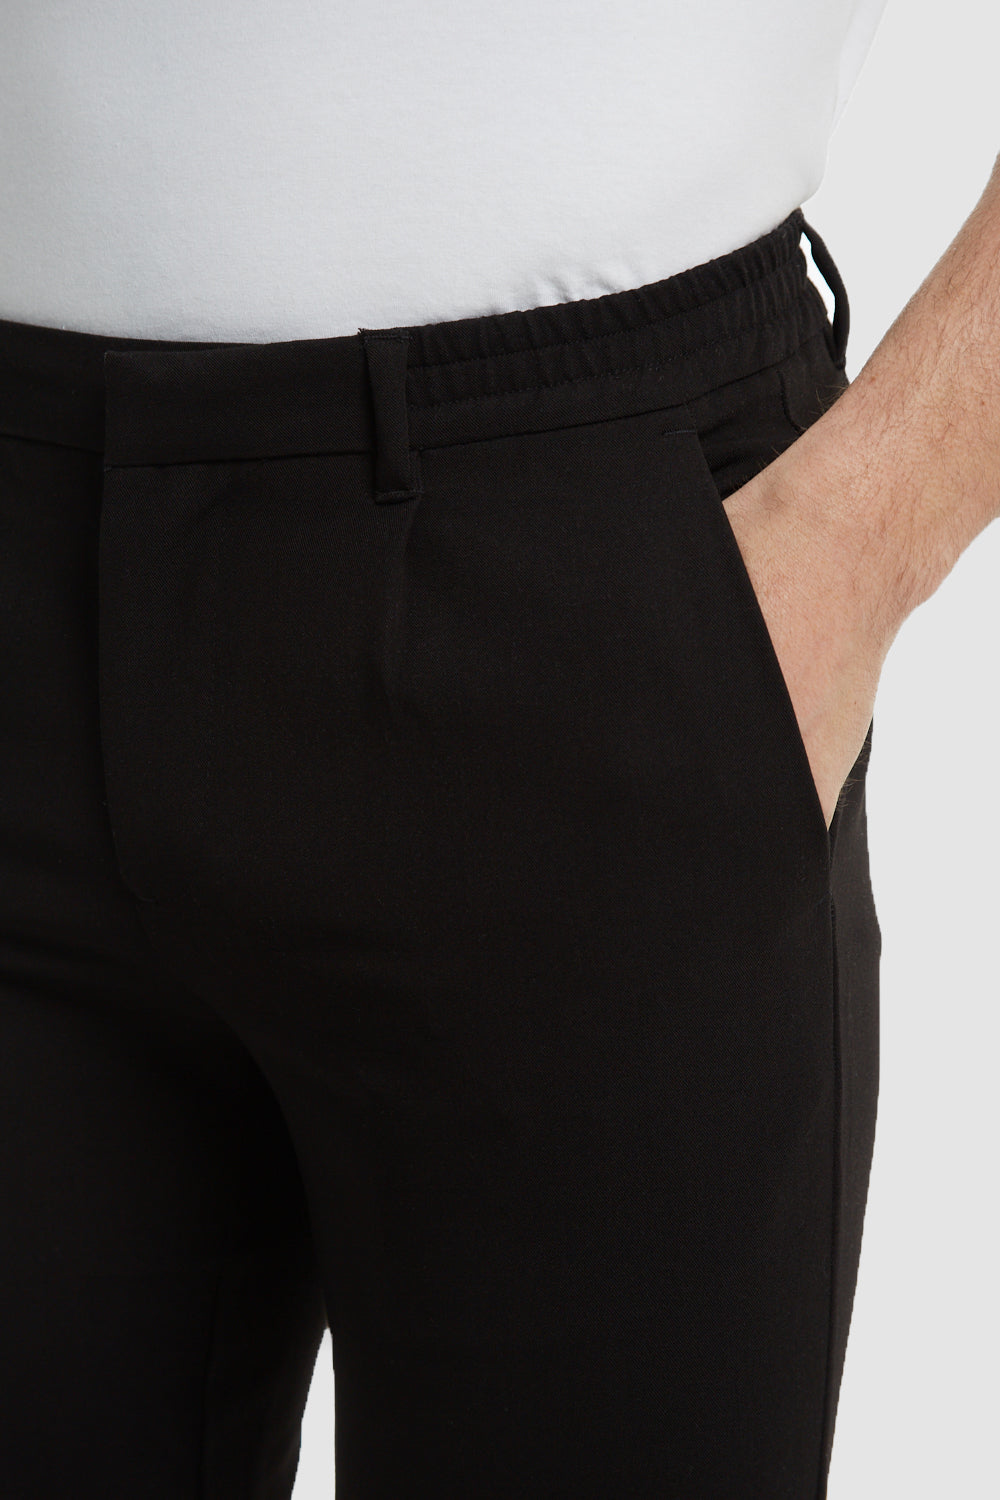 Pleated formal pants trousers for women office, casual wear and wear as  legging - Beige